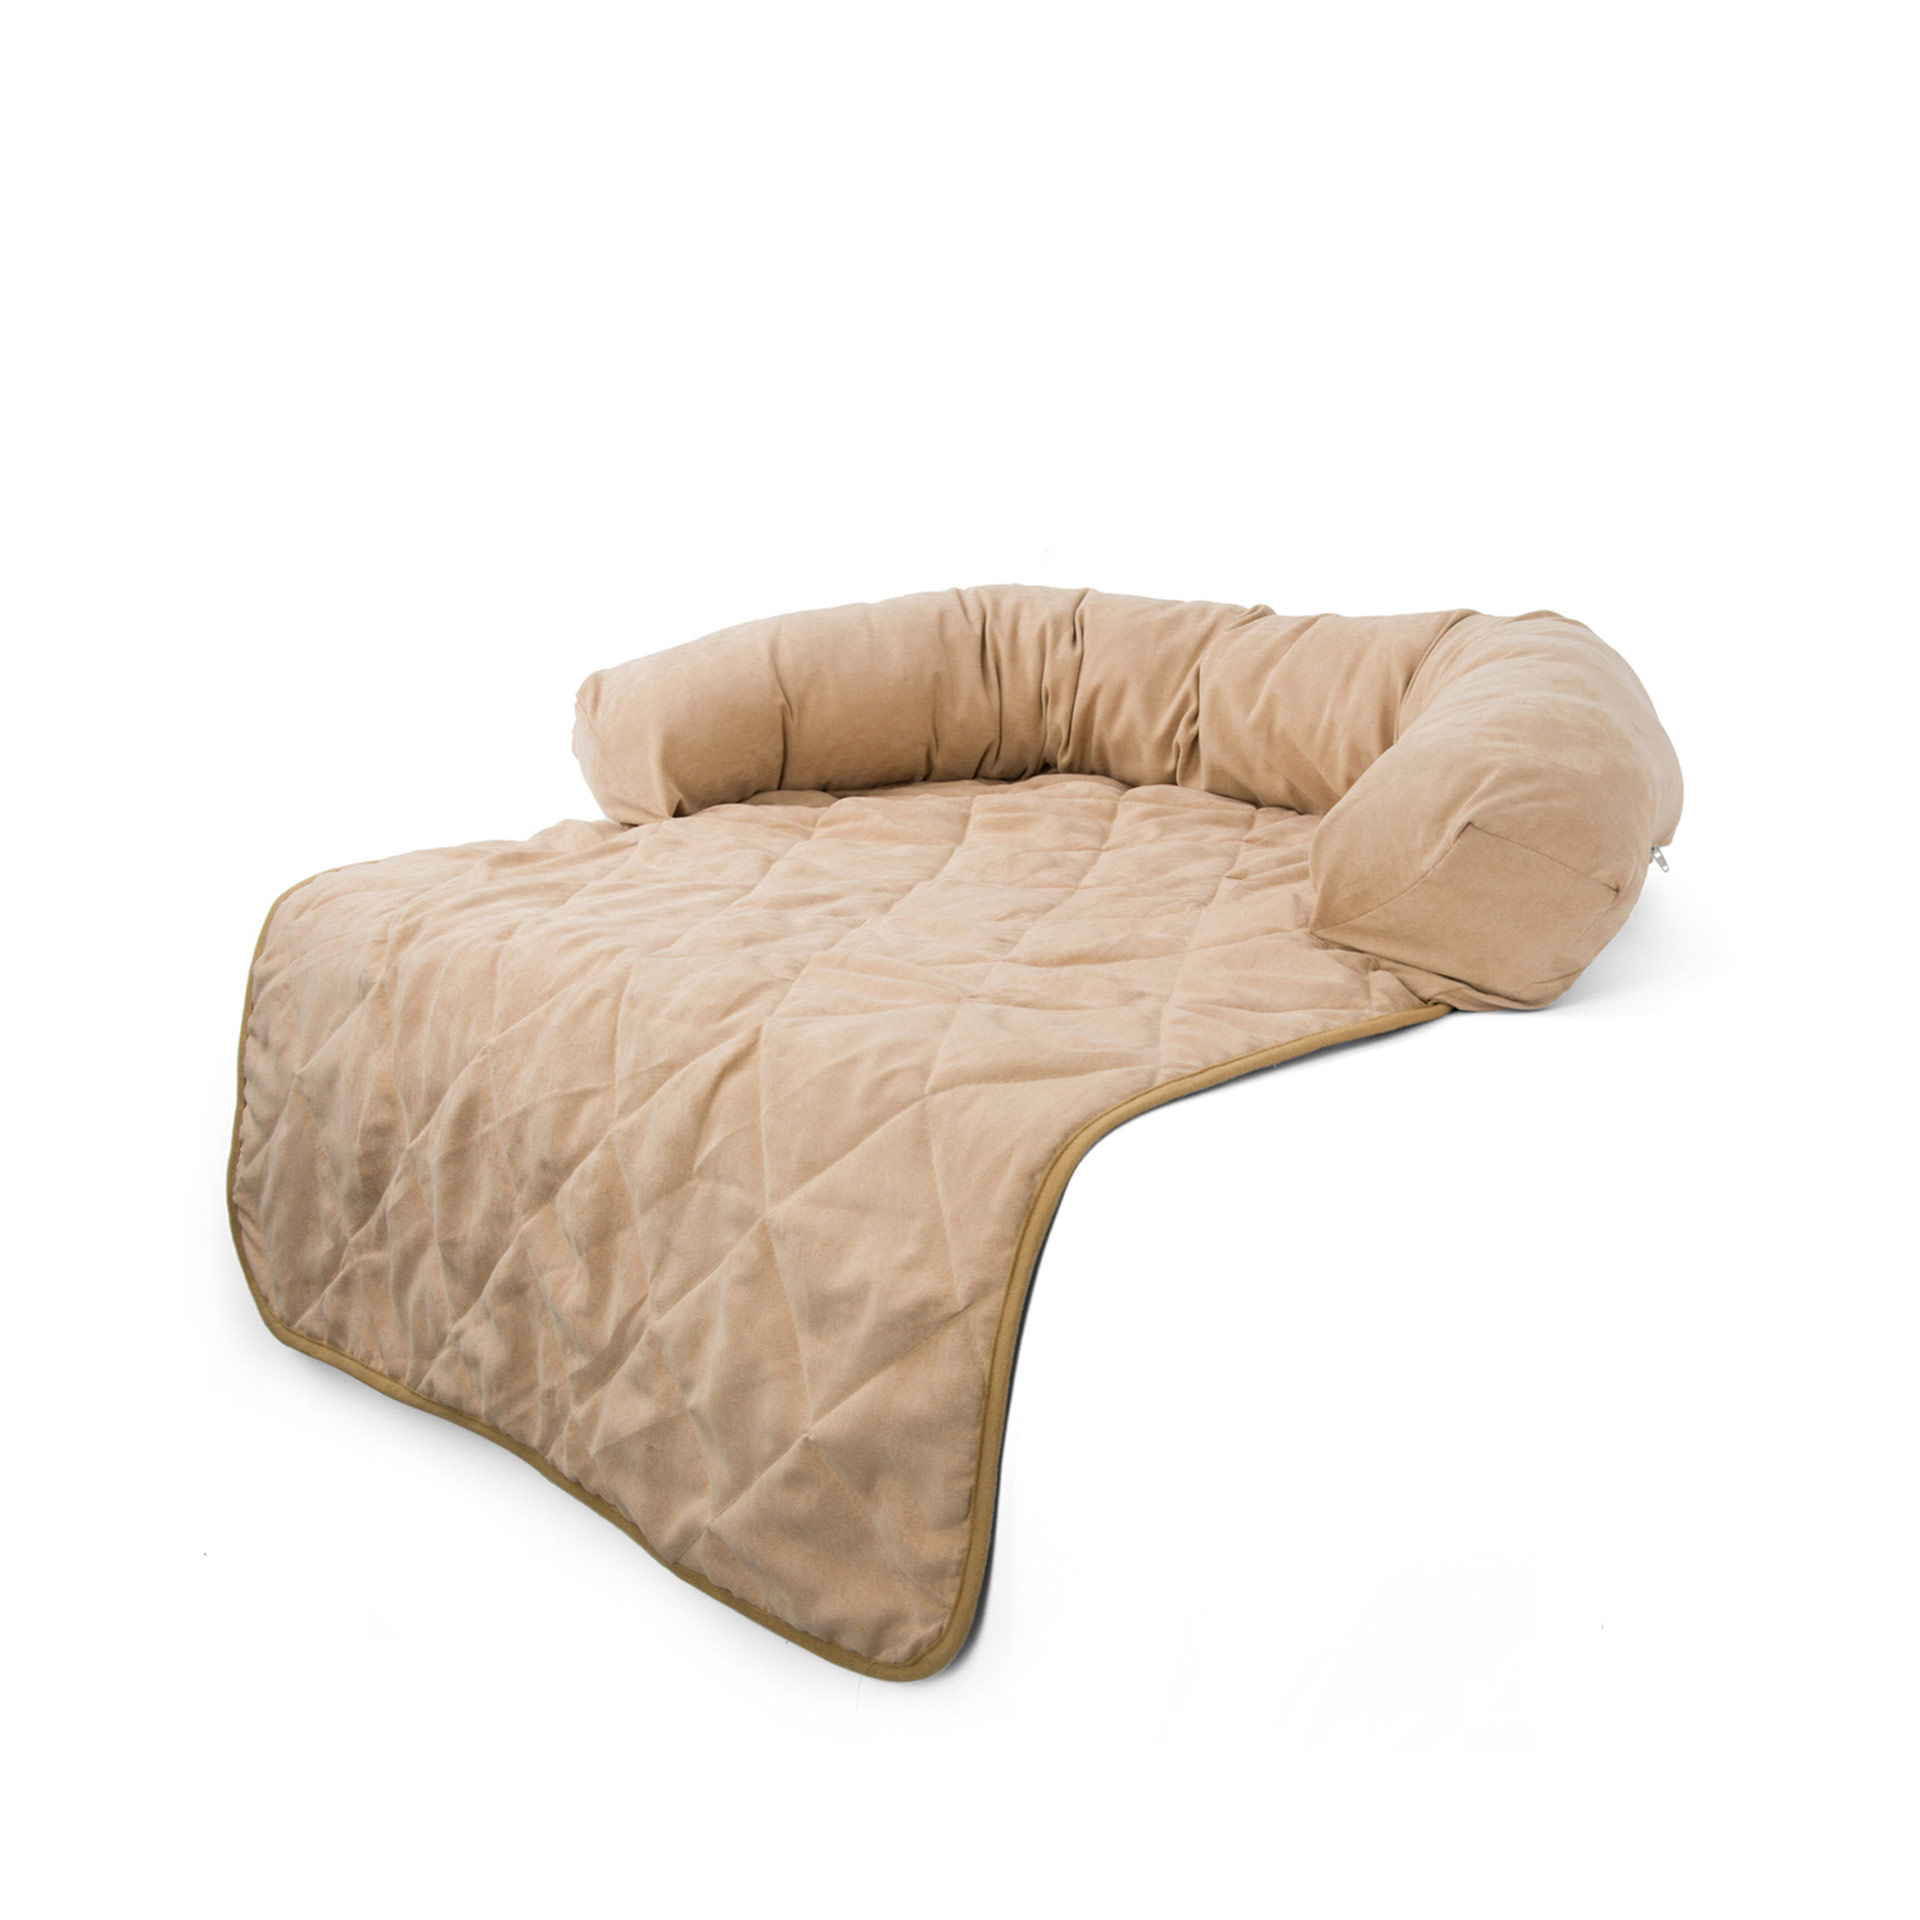 Cuccia coperta per divano, , large